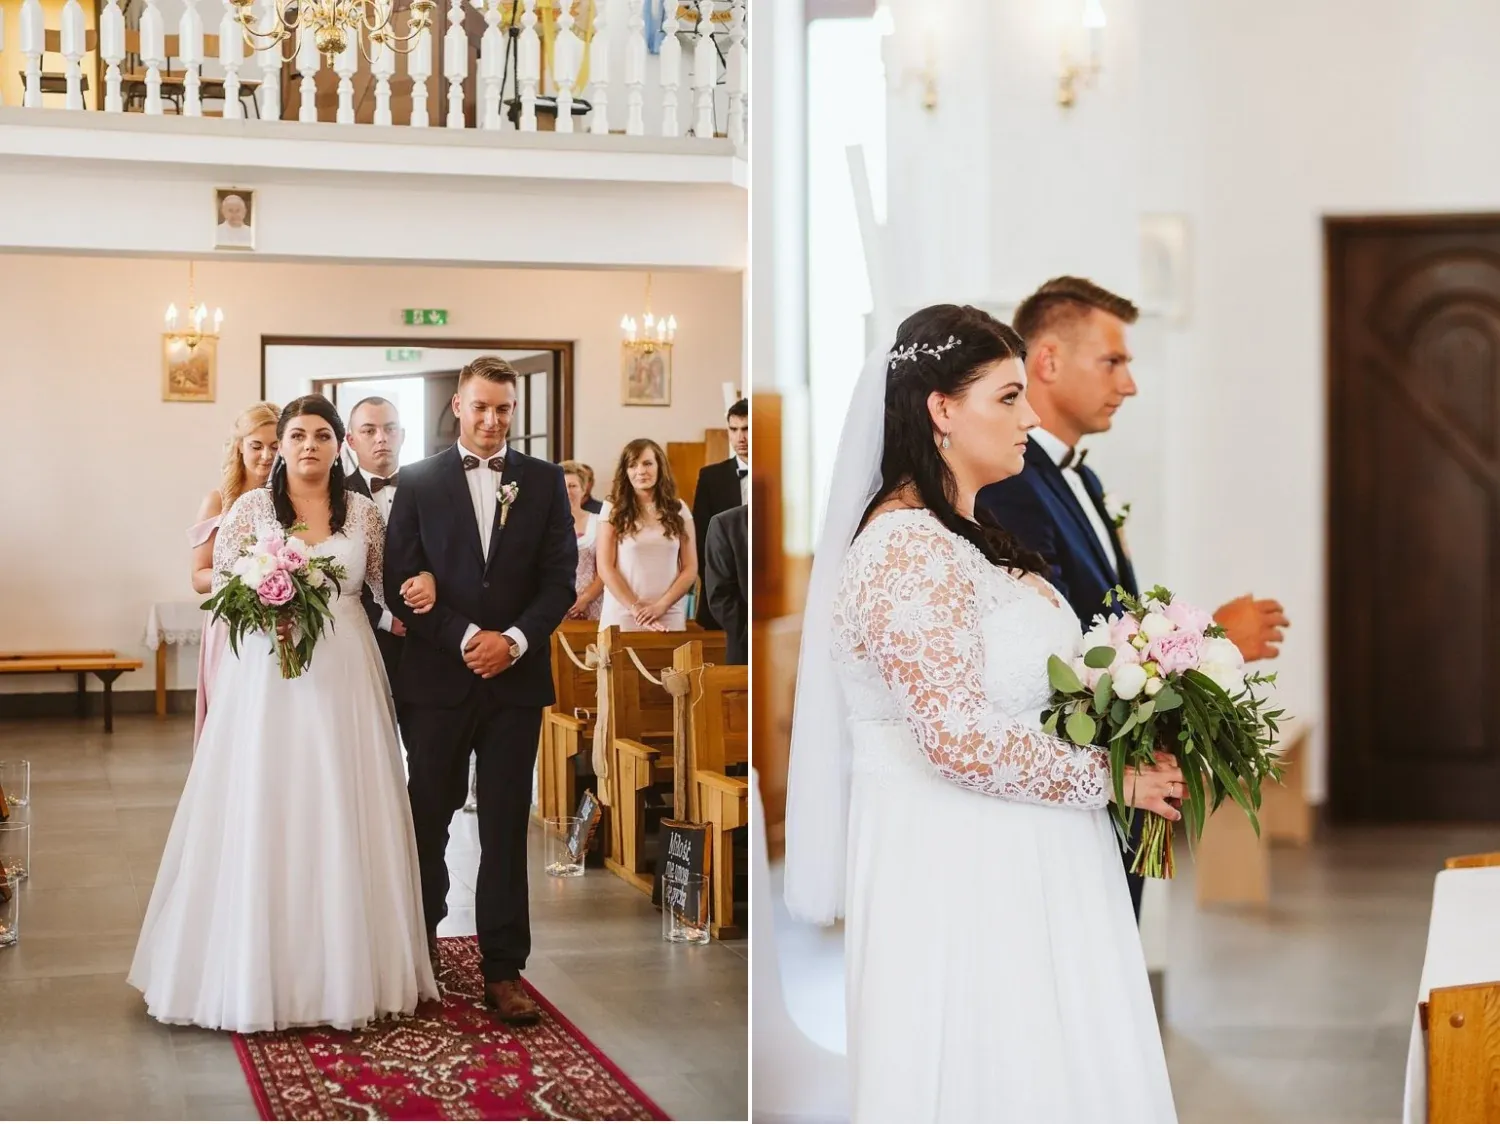 angelikakrzysztof_wedding_11.webp - Angelika & Krzysztof- Monika Chmielewska - wedding, portaits, family photography - Munich